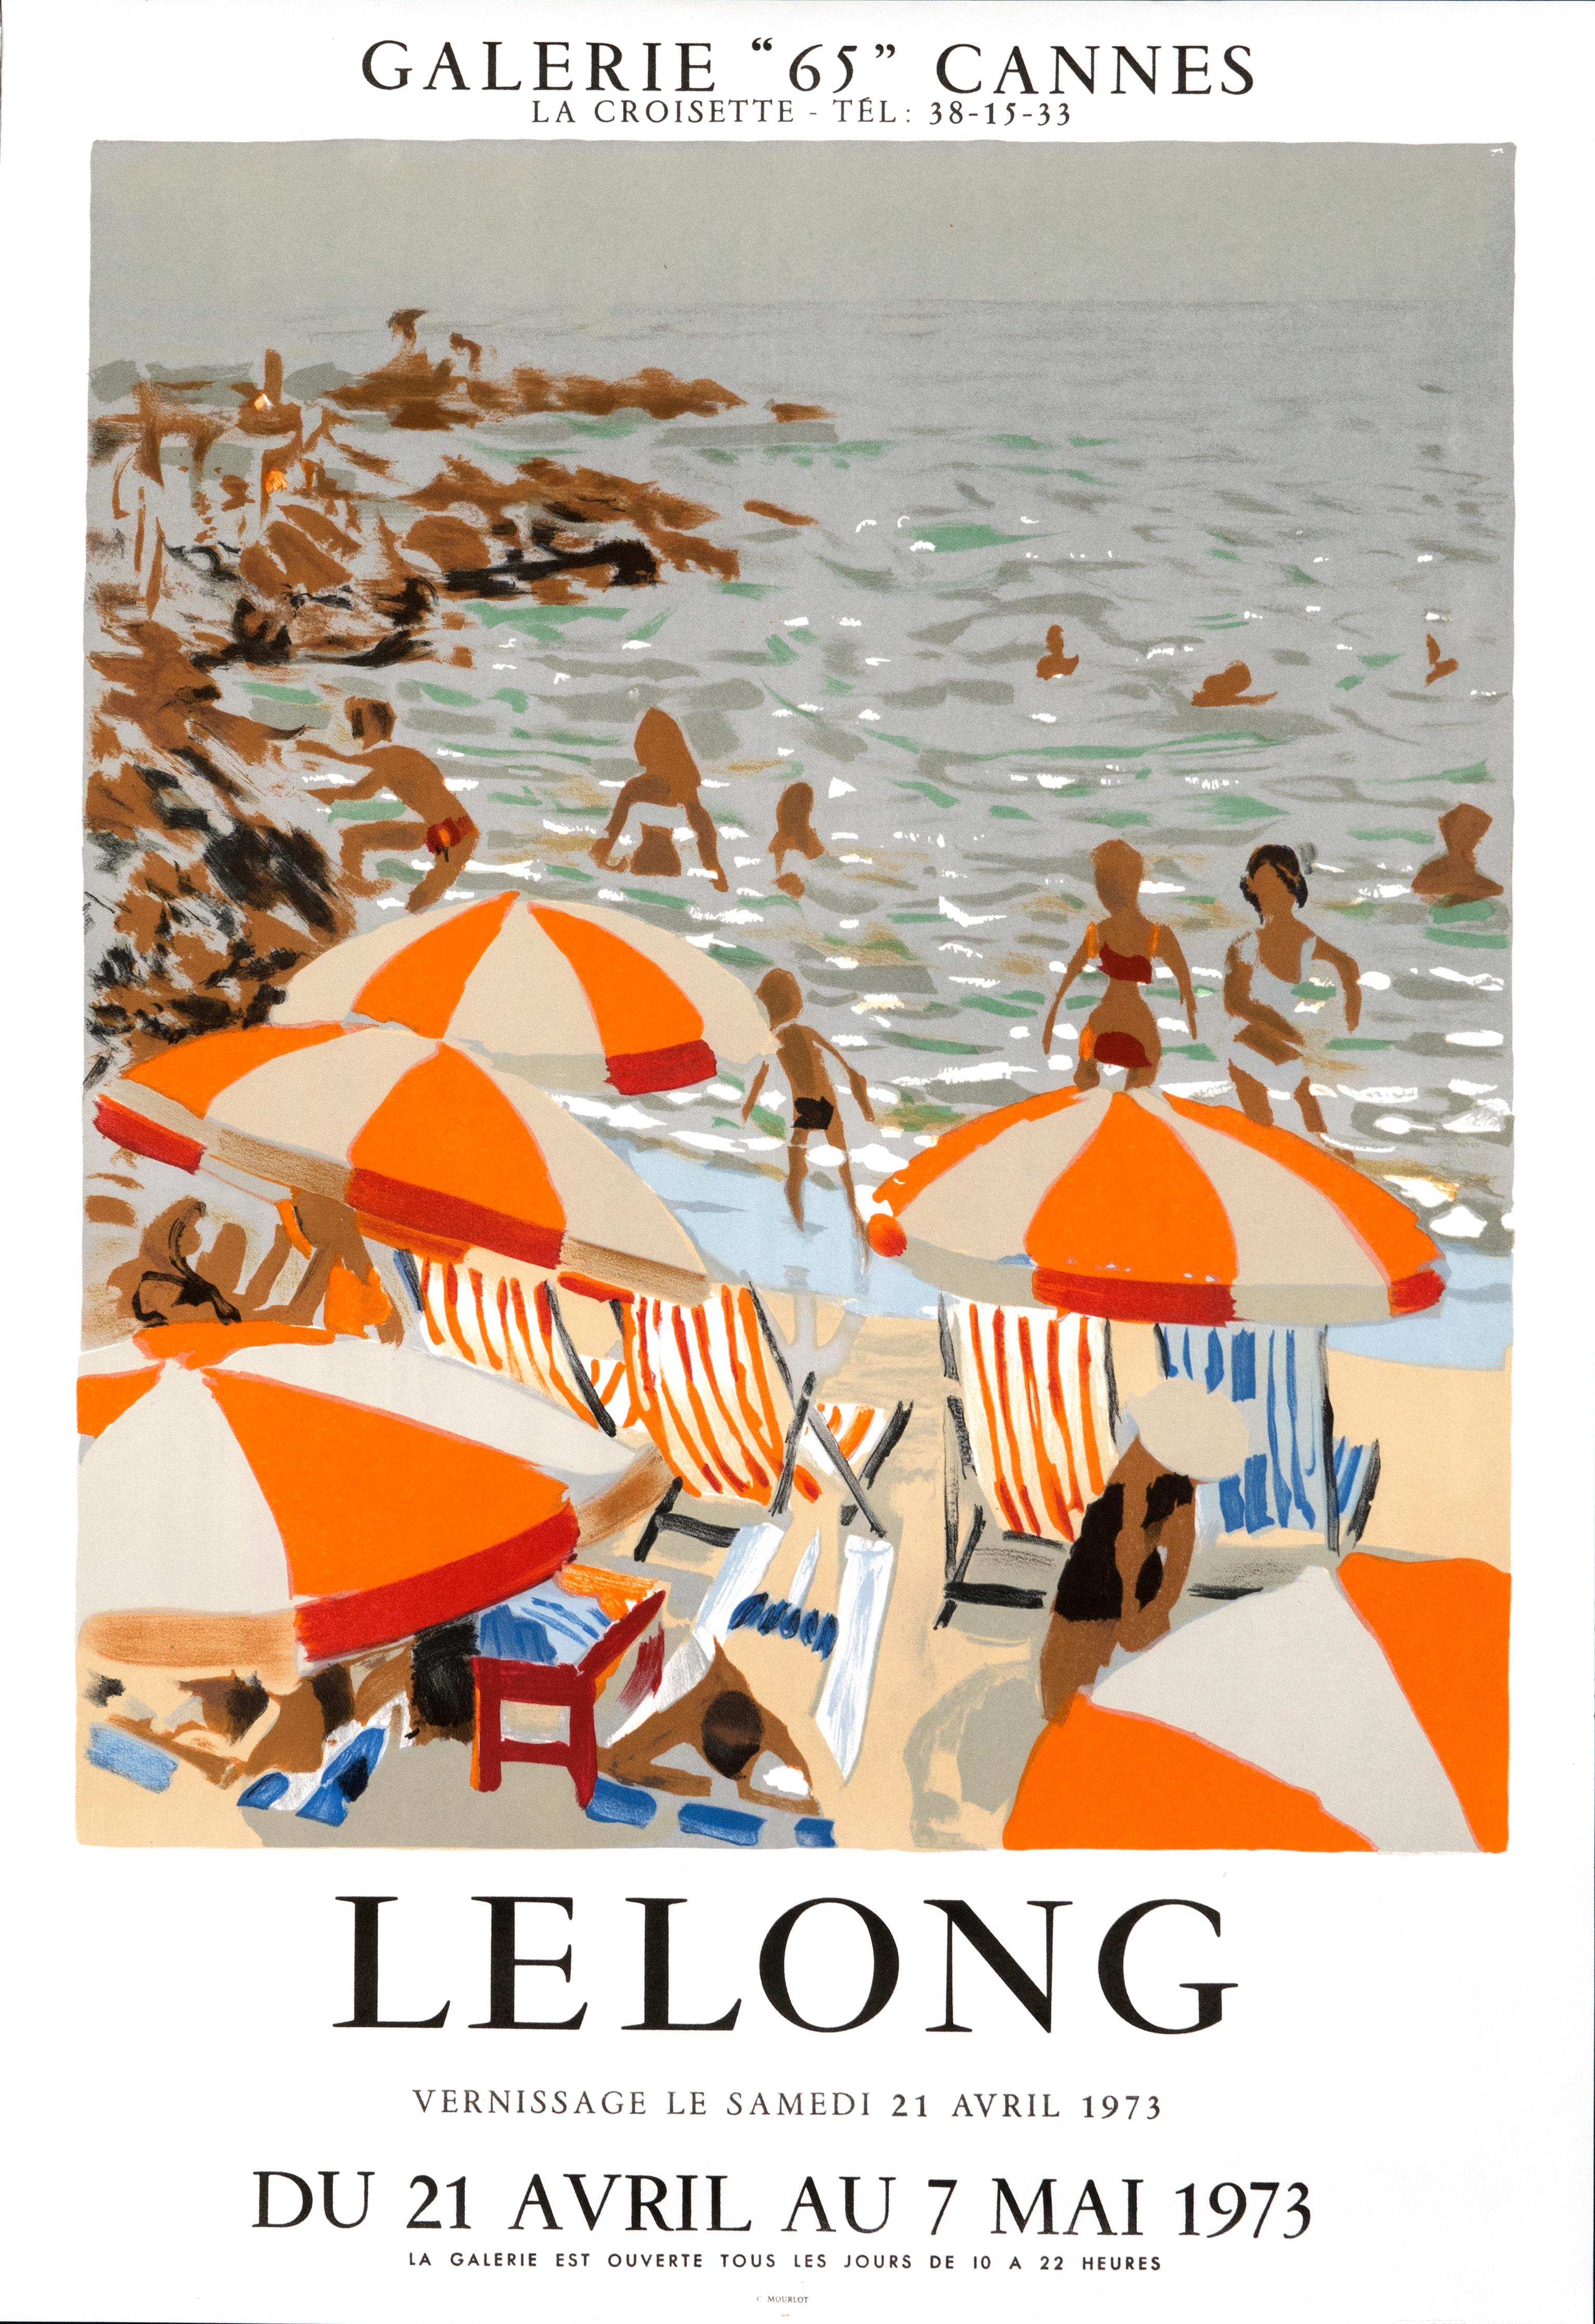 Pierre LeLong Landscape Print - "Lelong - Galerie "65" Cannes" Summer Beach Scene French Exhibition Poster 1970s